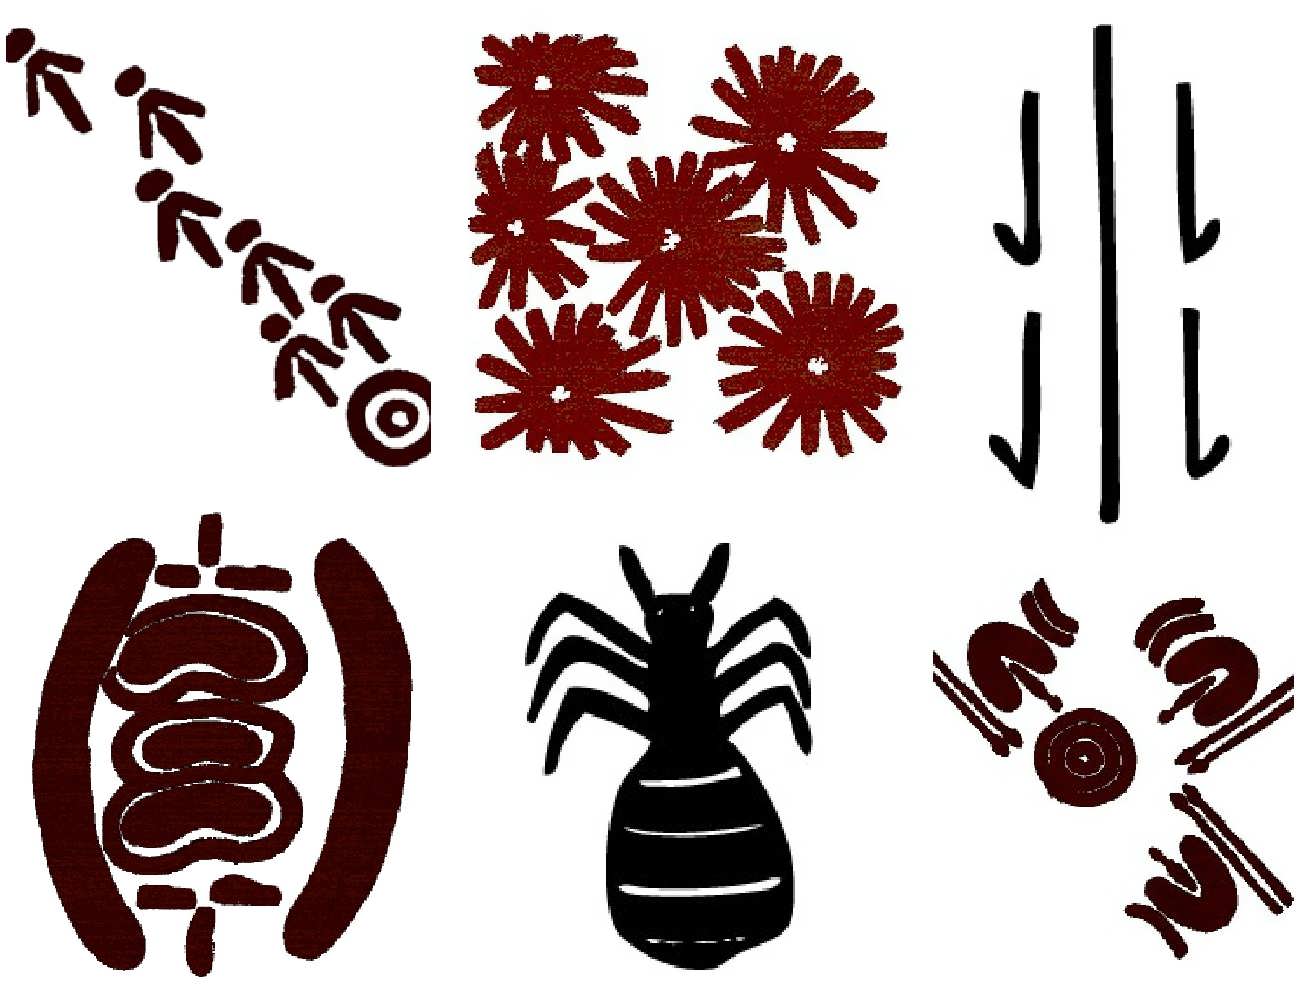 indigenous symbols